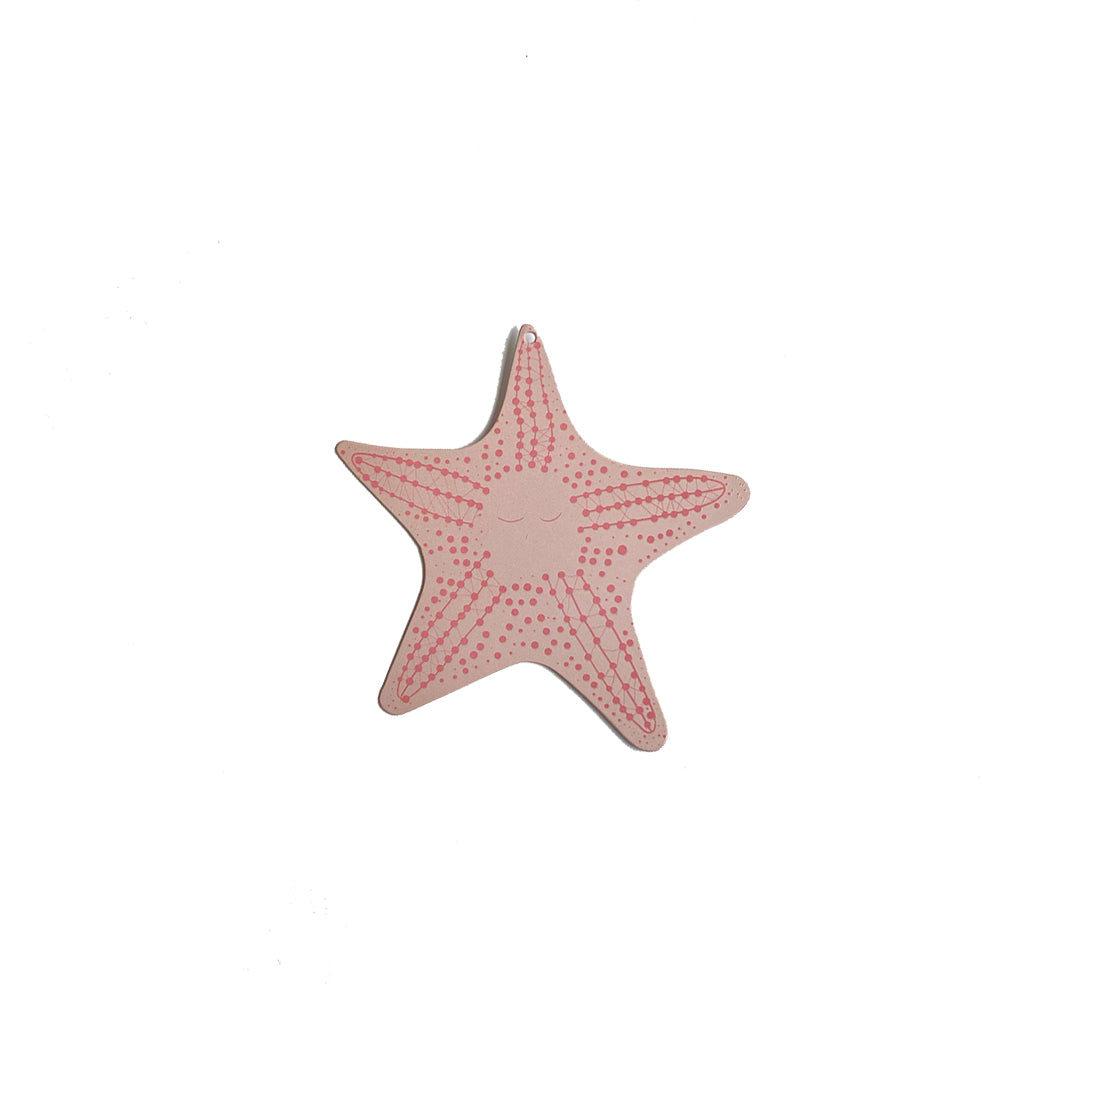 STAR FISH TAG